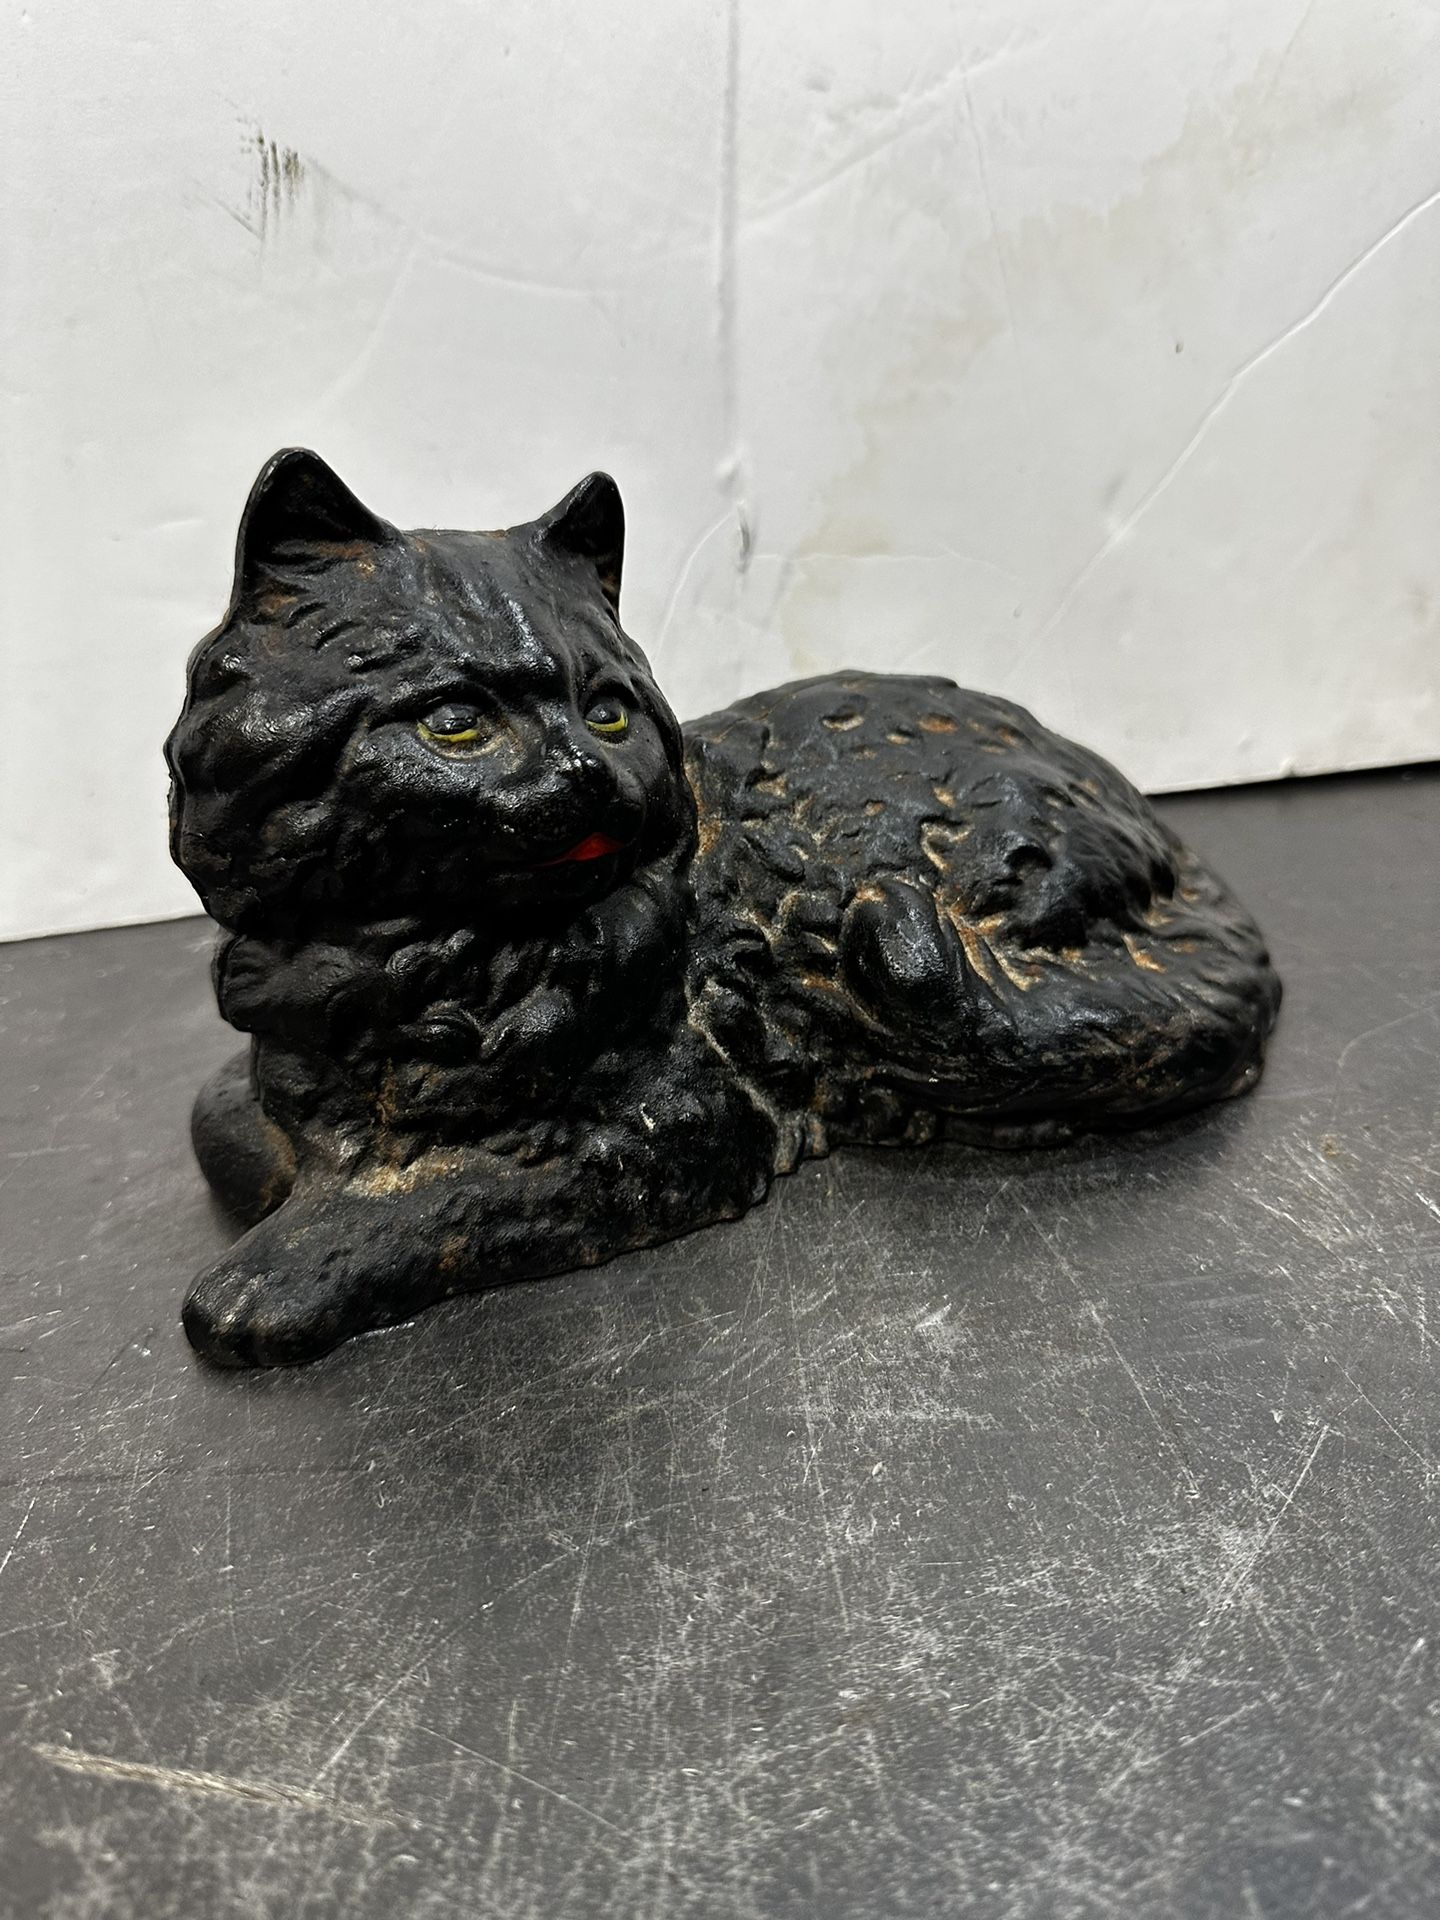 Antique Cast Iron Doorstop laying down black cat Cast Iron Art